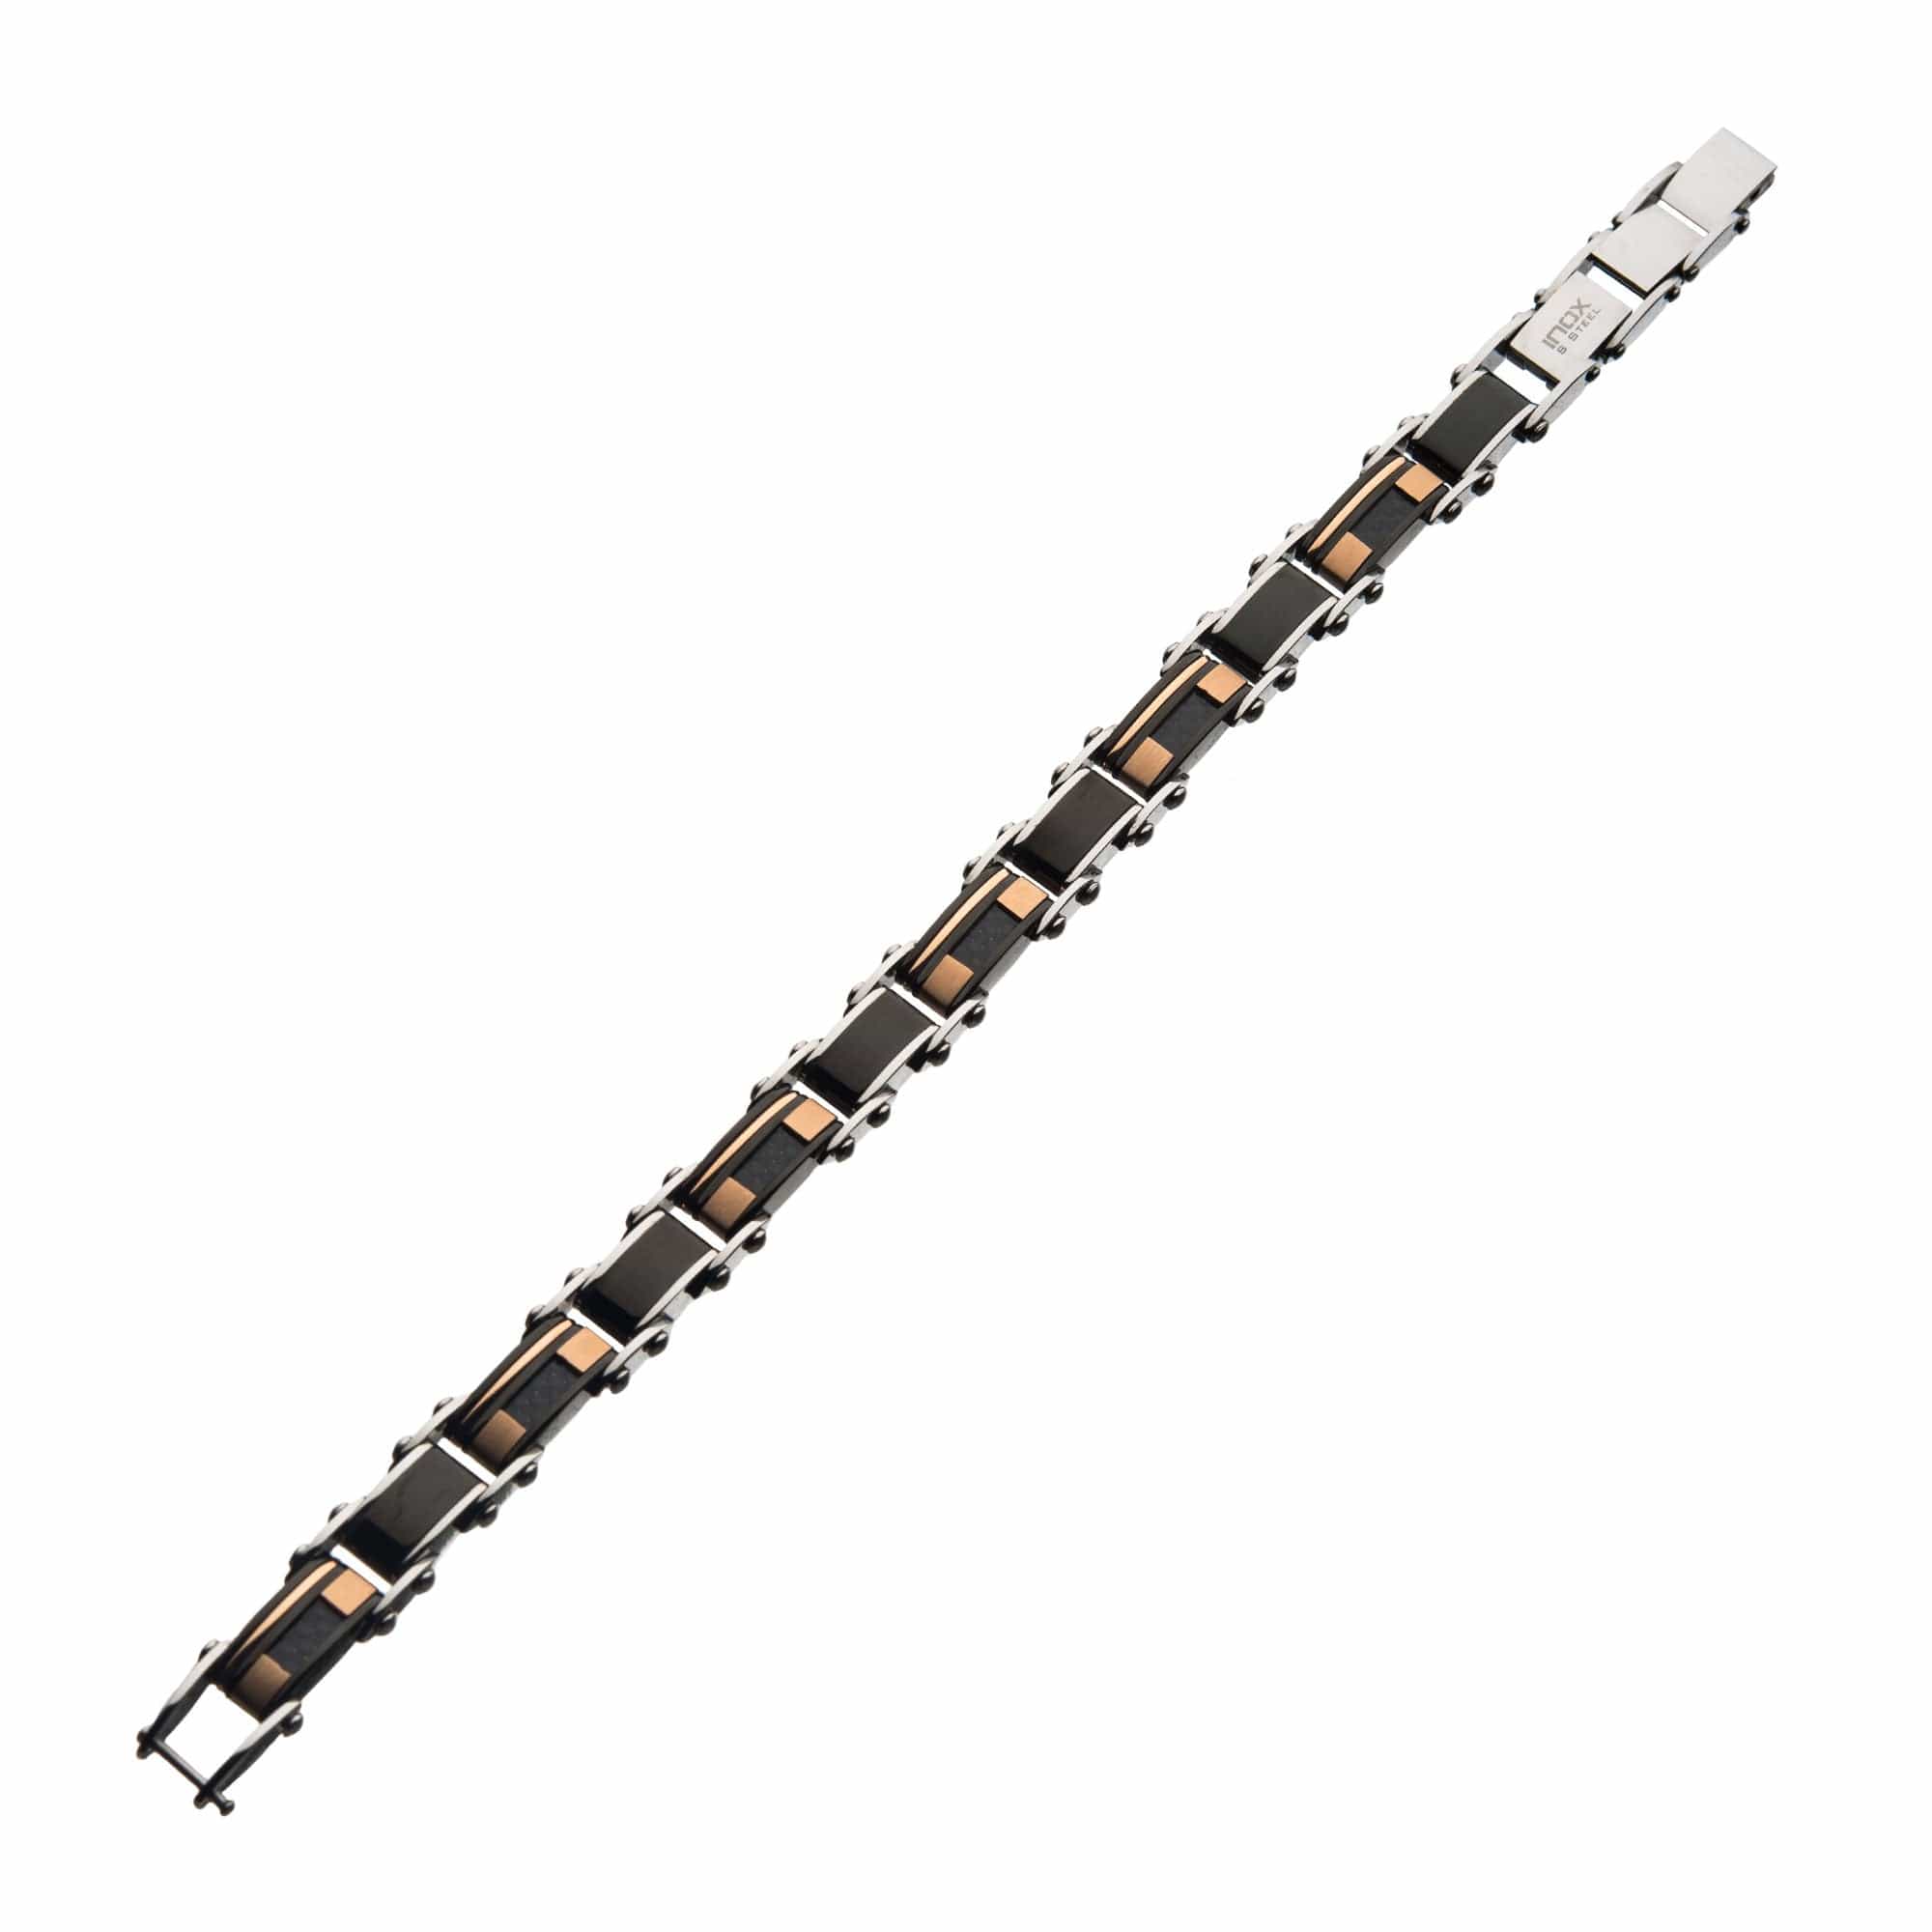 INOX JEWELRY Bracelets Rose, Black and Silver Tone Stainless Steel Matte Finish Reversible Link Bracelet BRDDS14RG